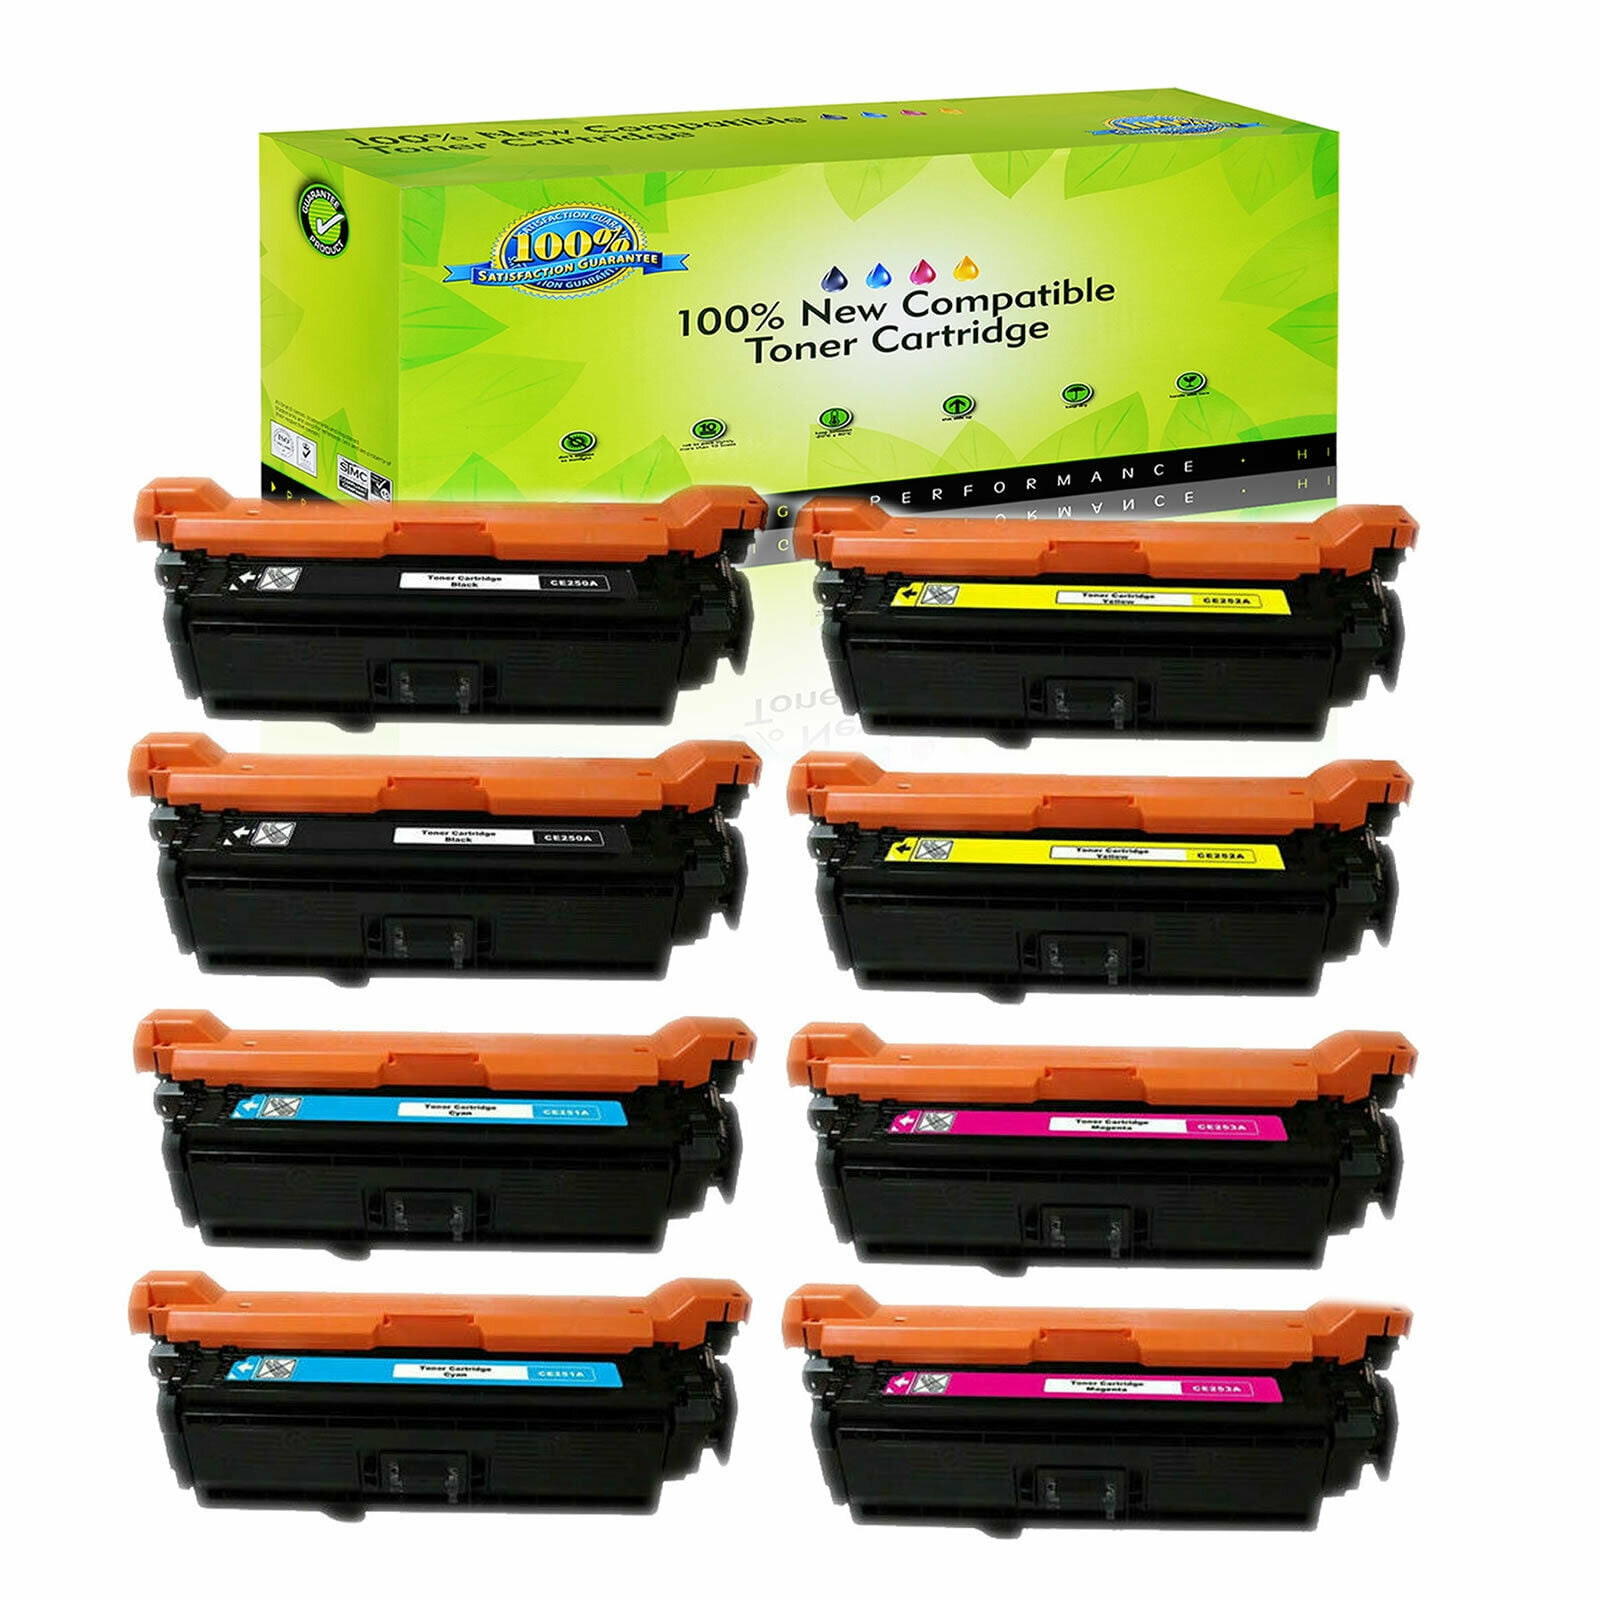 Precise Print Compatible Toner Cartridge for HP CE250A for HP Color Laserjet Pro CM3530 3530fs CP3525dn 3525n 3525x Printers Black Yellow Cyan Magenta Drum Unit Black2